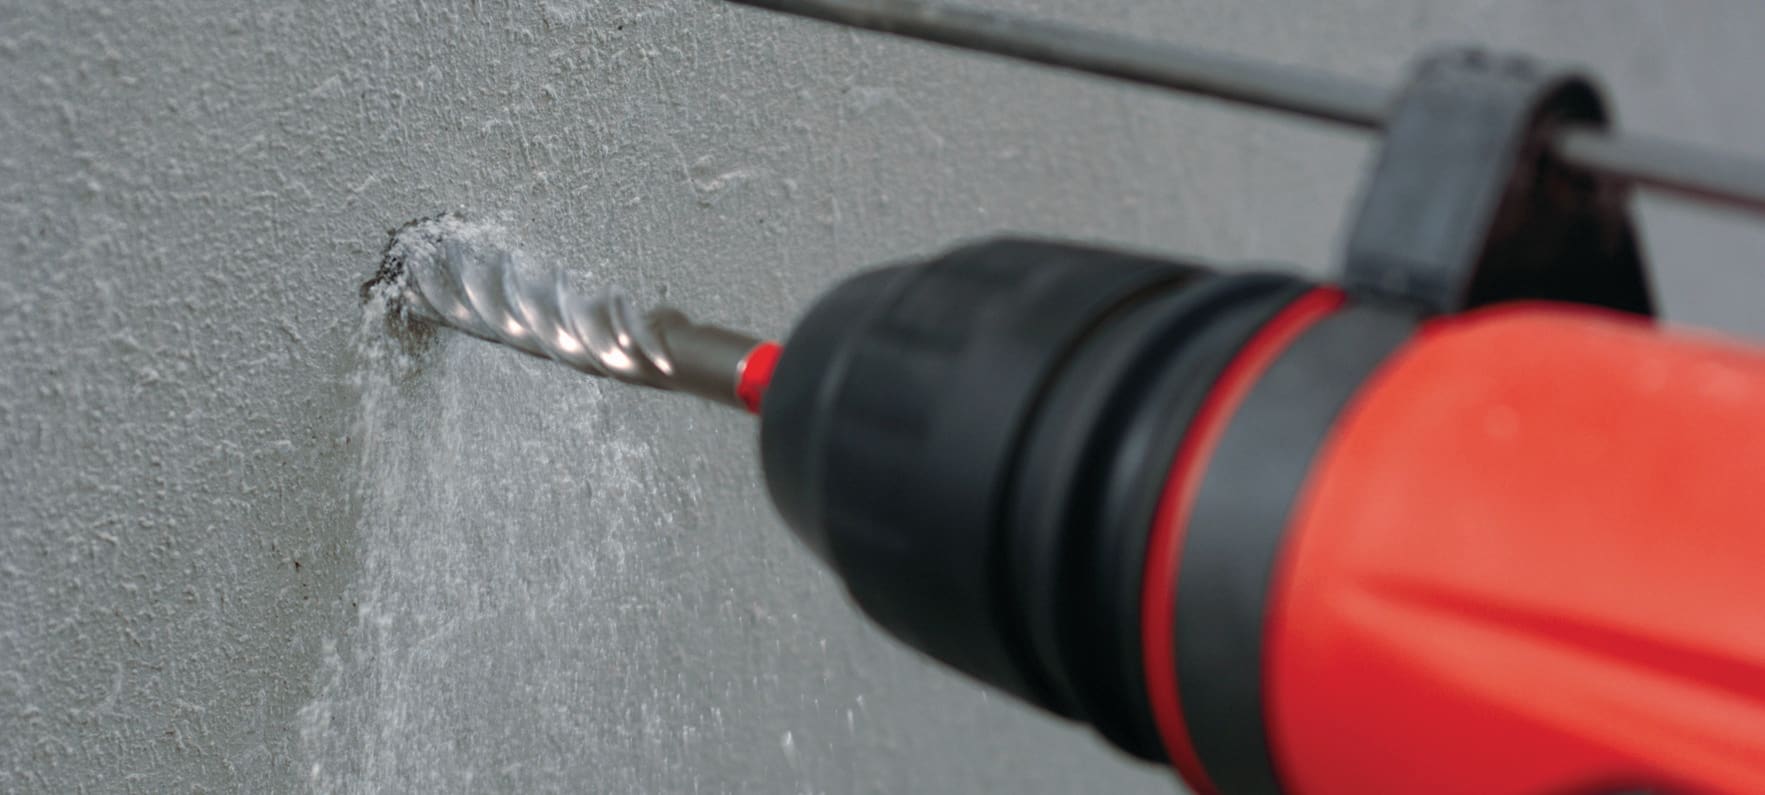 Hilti Hilti TE-CX Hammer drill bit 6mm x 220mm TE-CX 6/22 working length 150mm SDS+ 